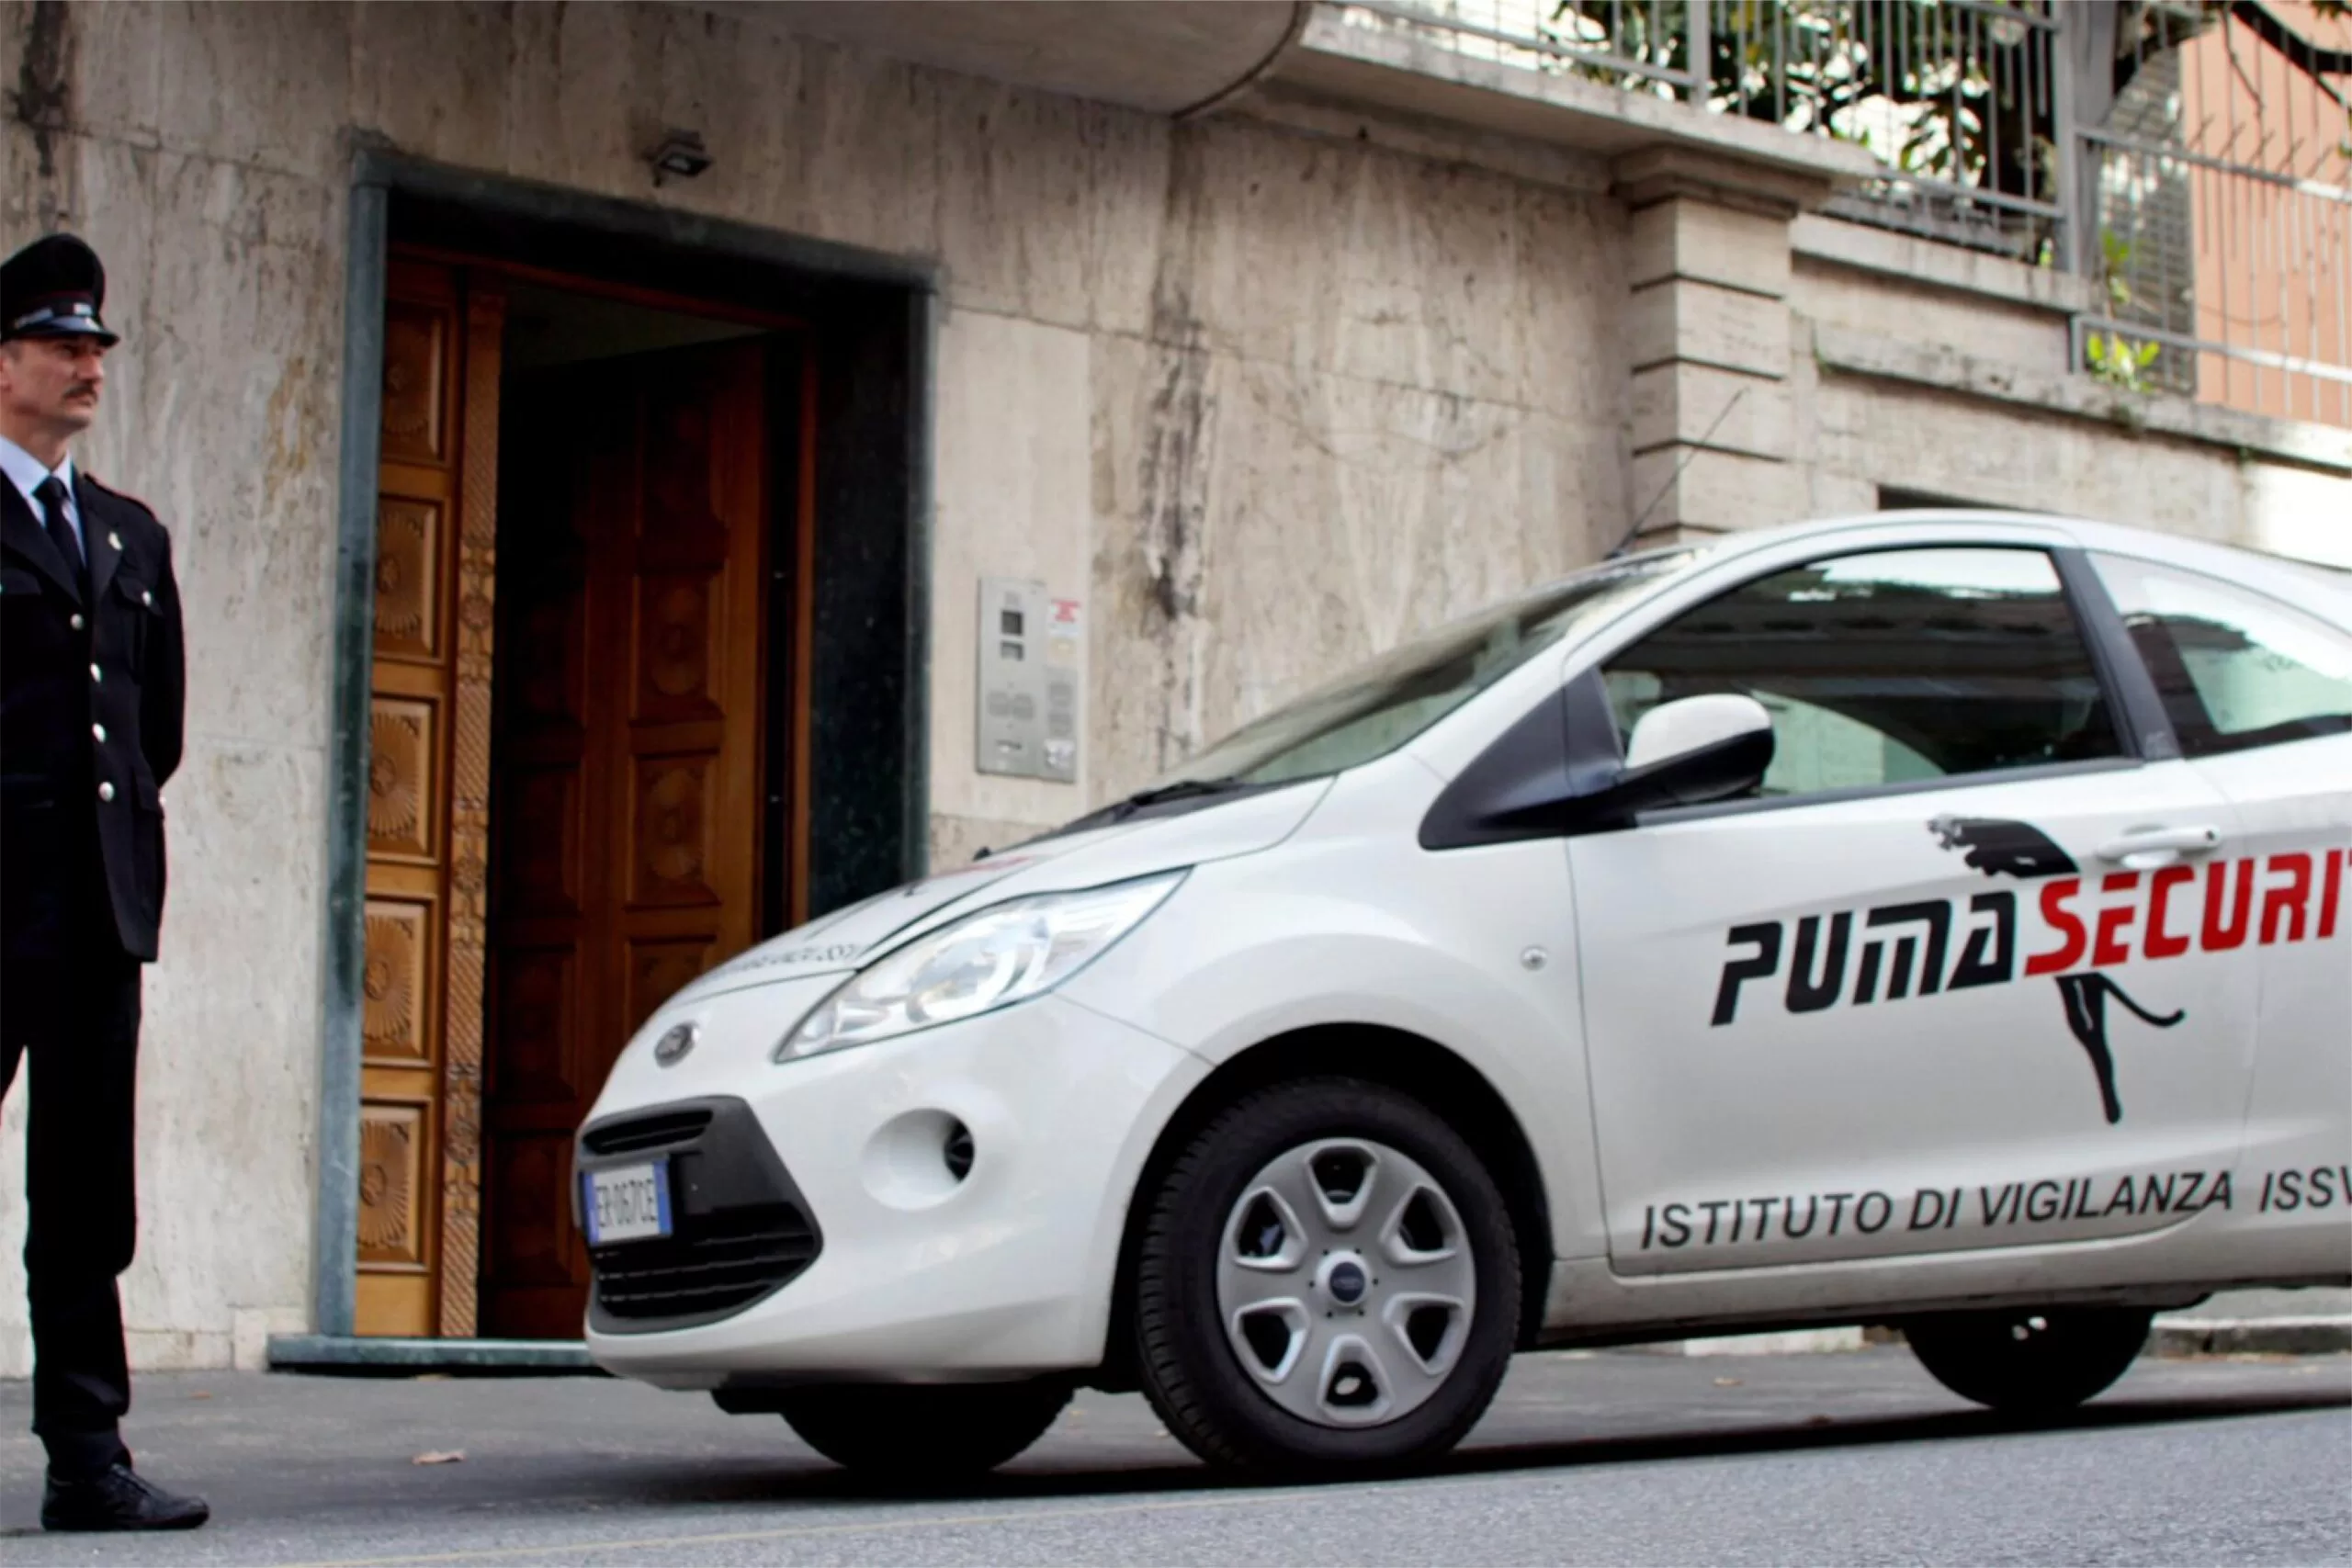 Puma Security – Istituto di vigilanza